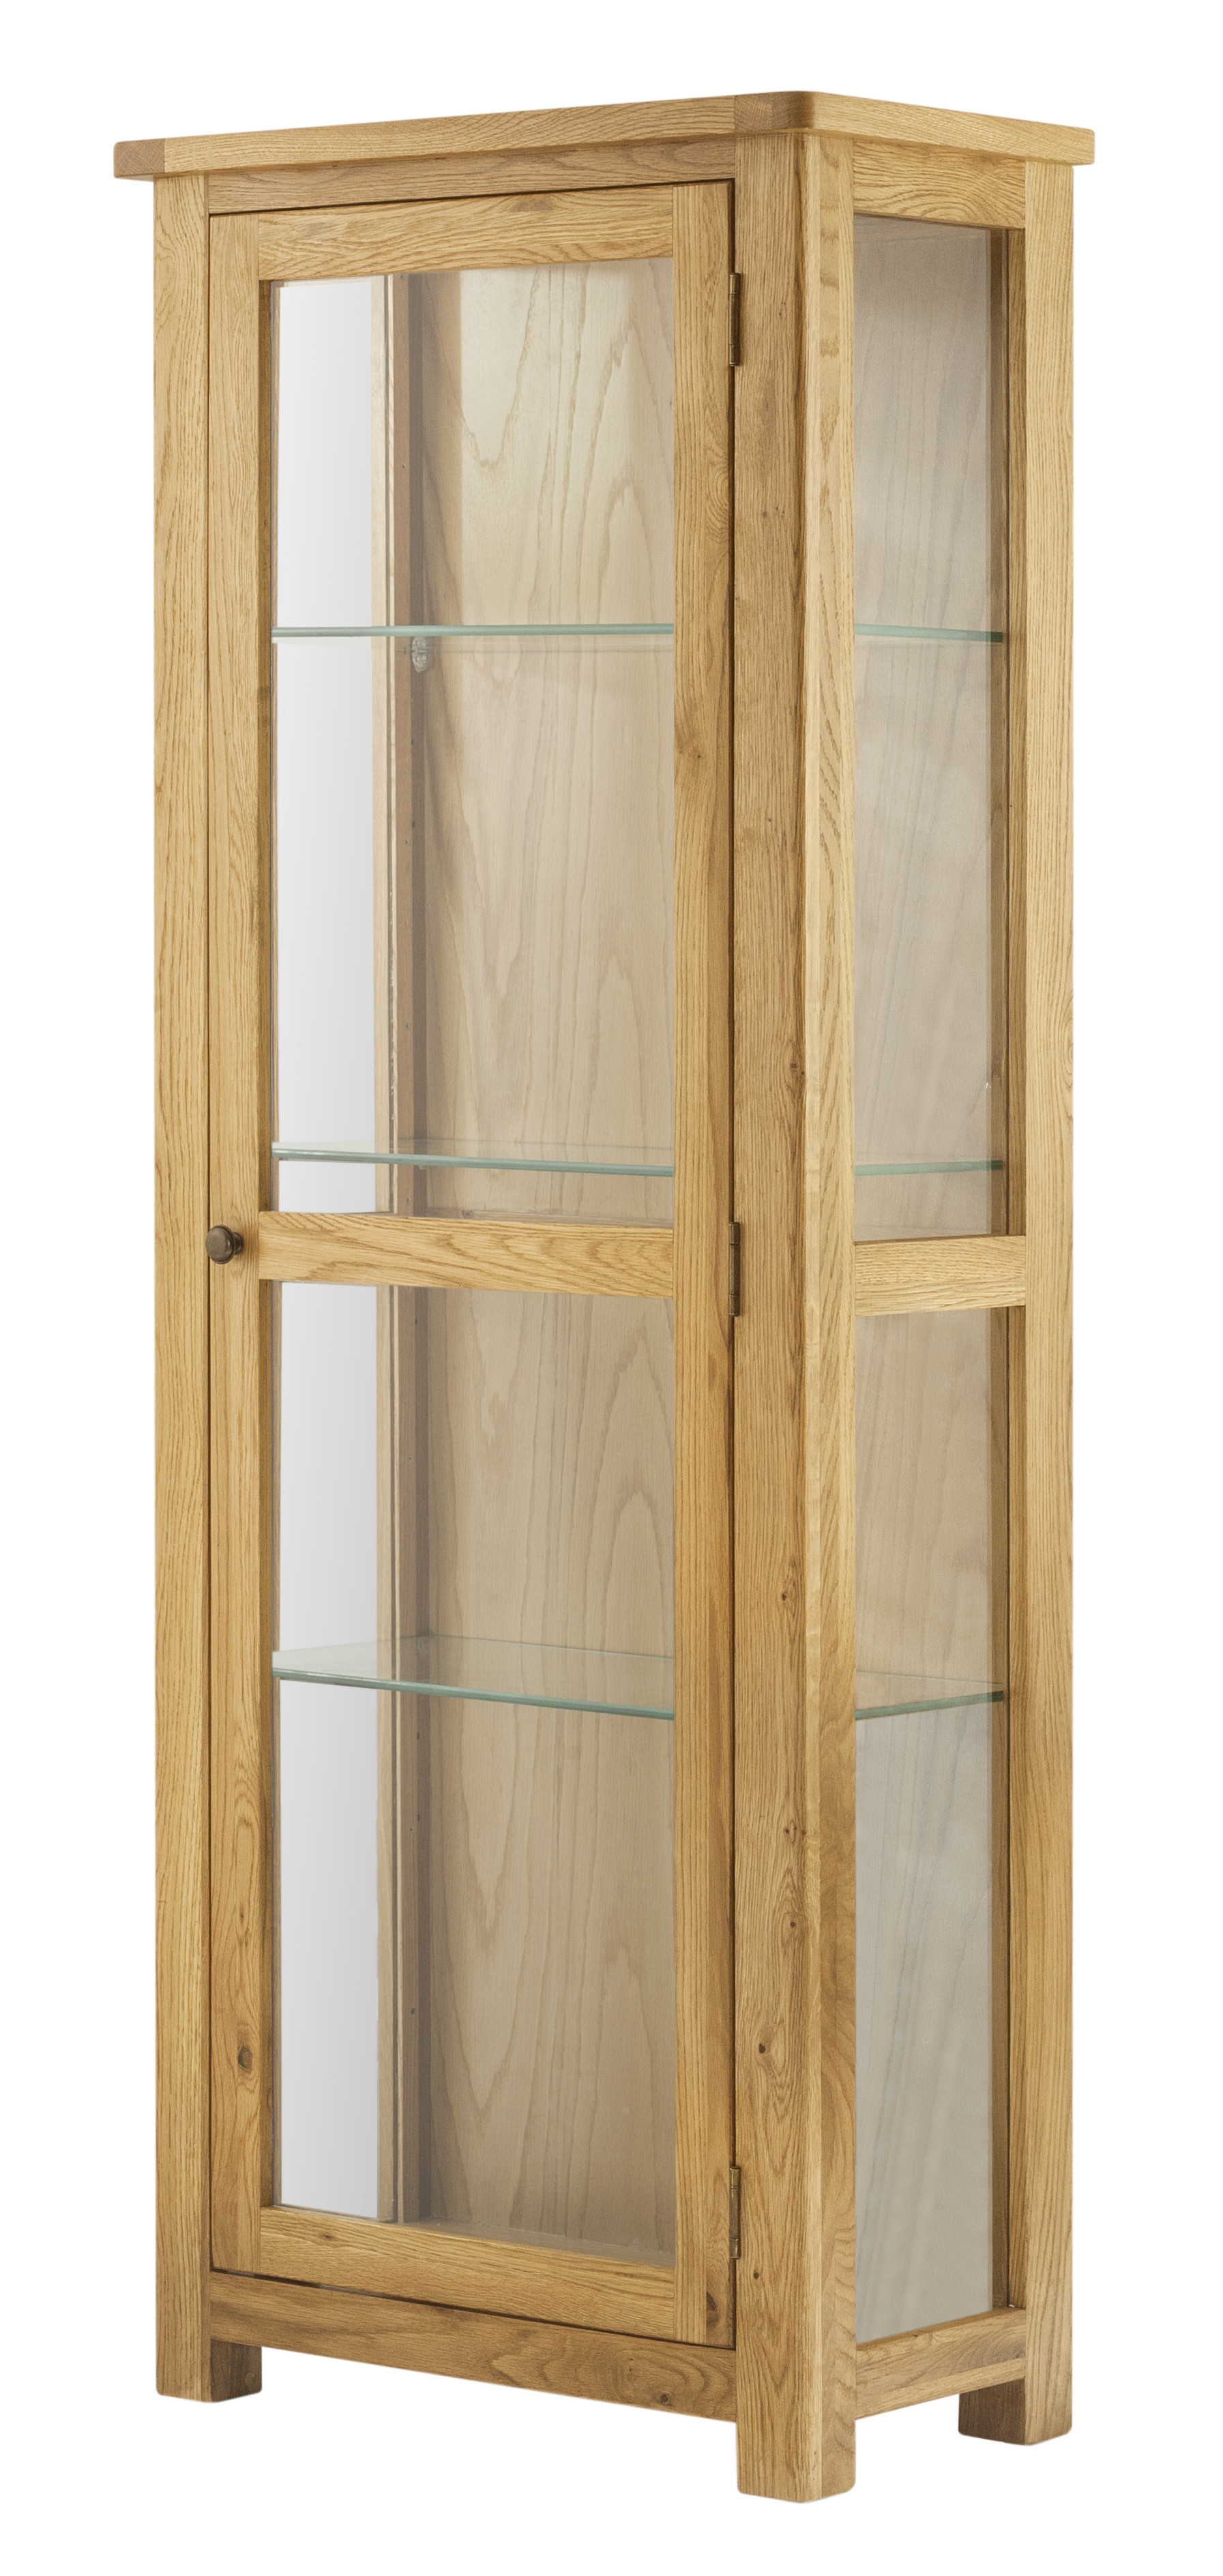 Portman Glass Display Cabinet In Oak Oak Furniture From House Of Oak within sizing 1793 X 3777